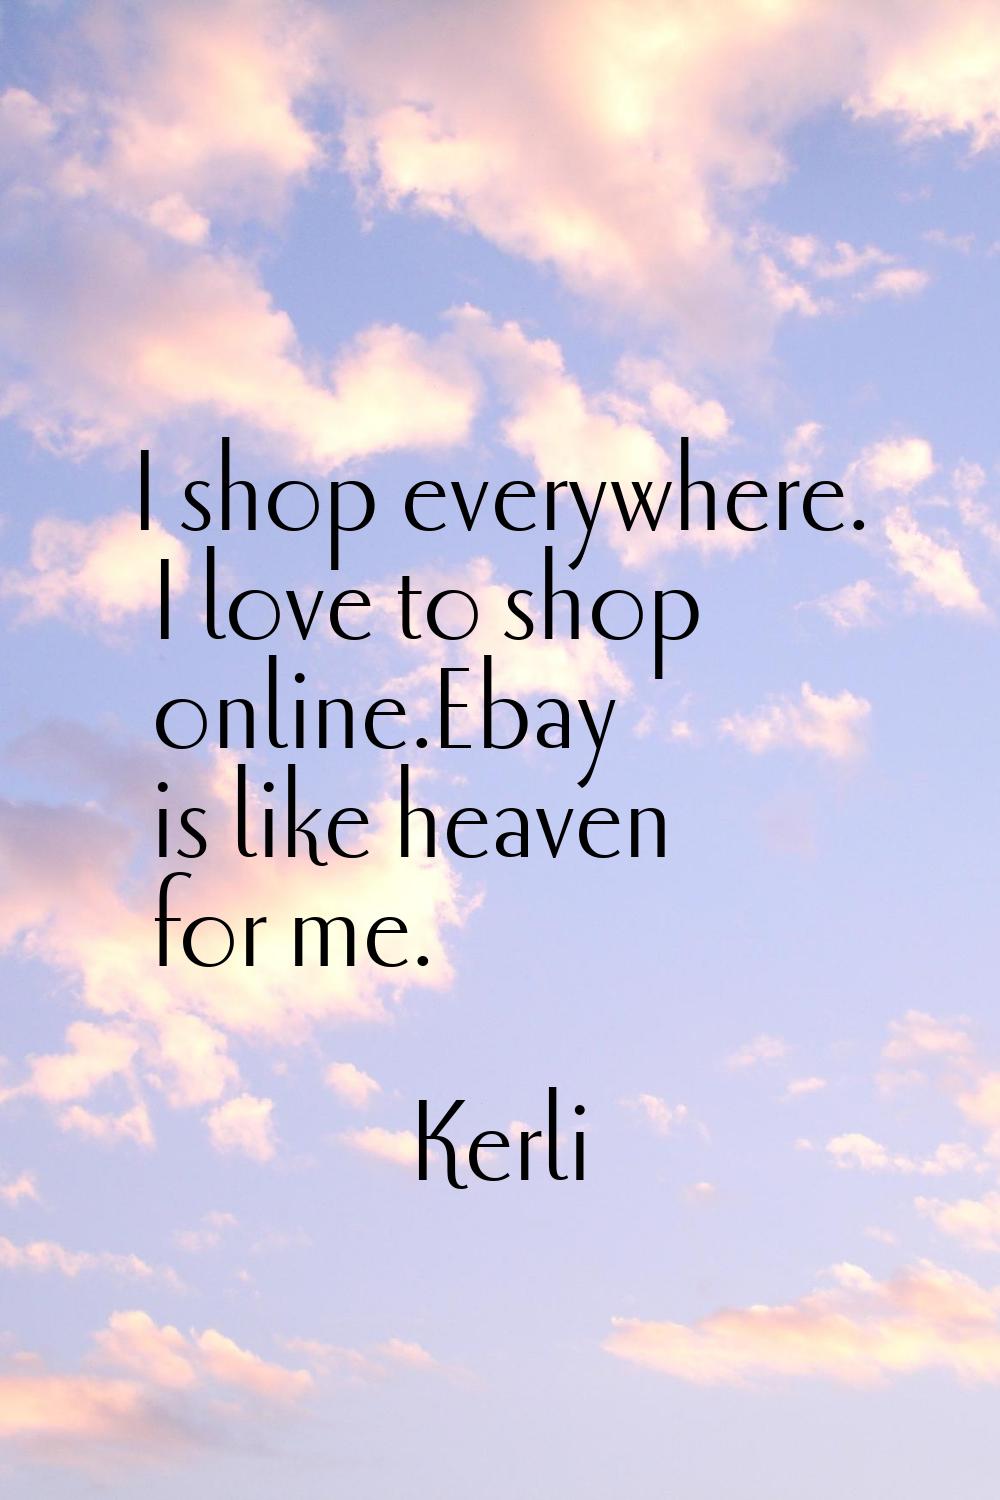 I shop everywhere. I love to shop online.Ebay is like heaven for me.